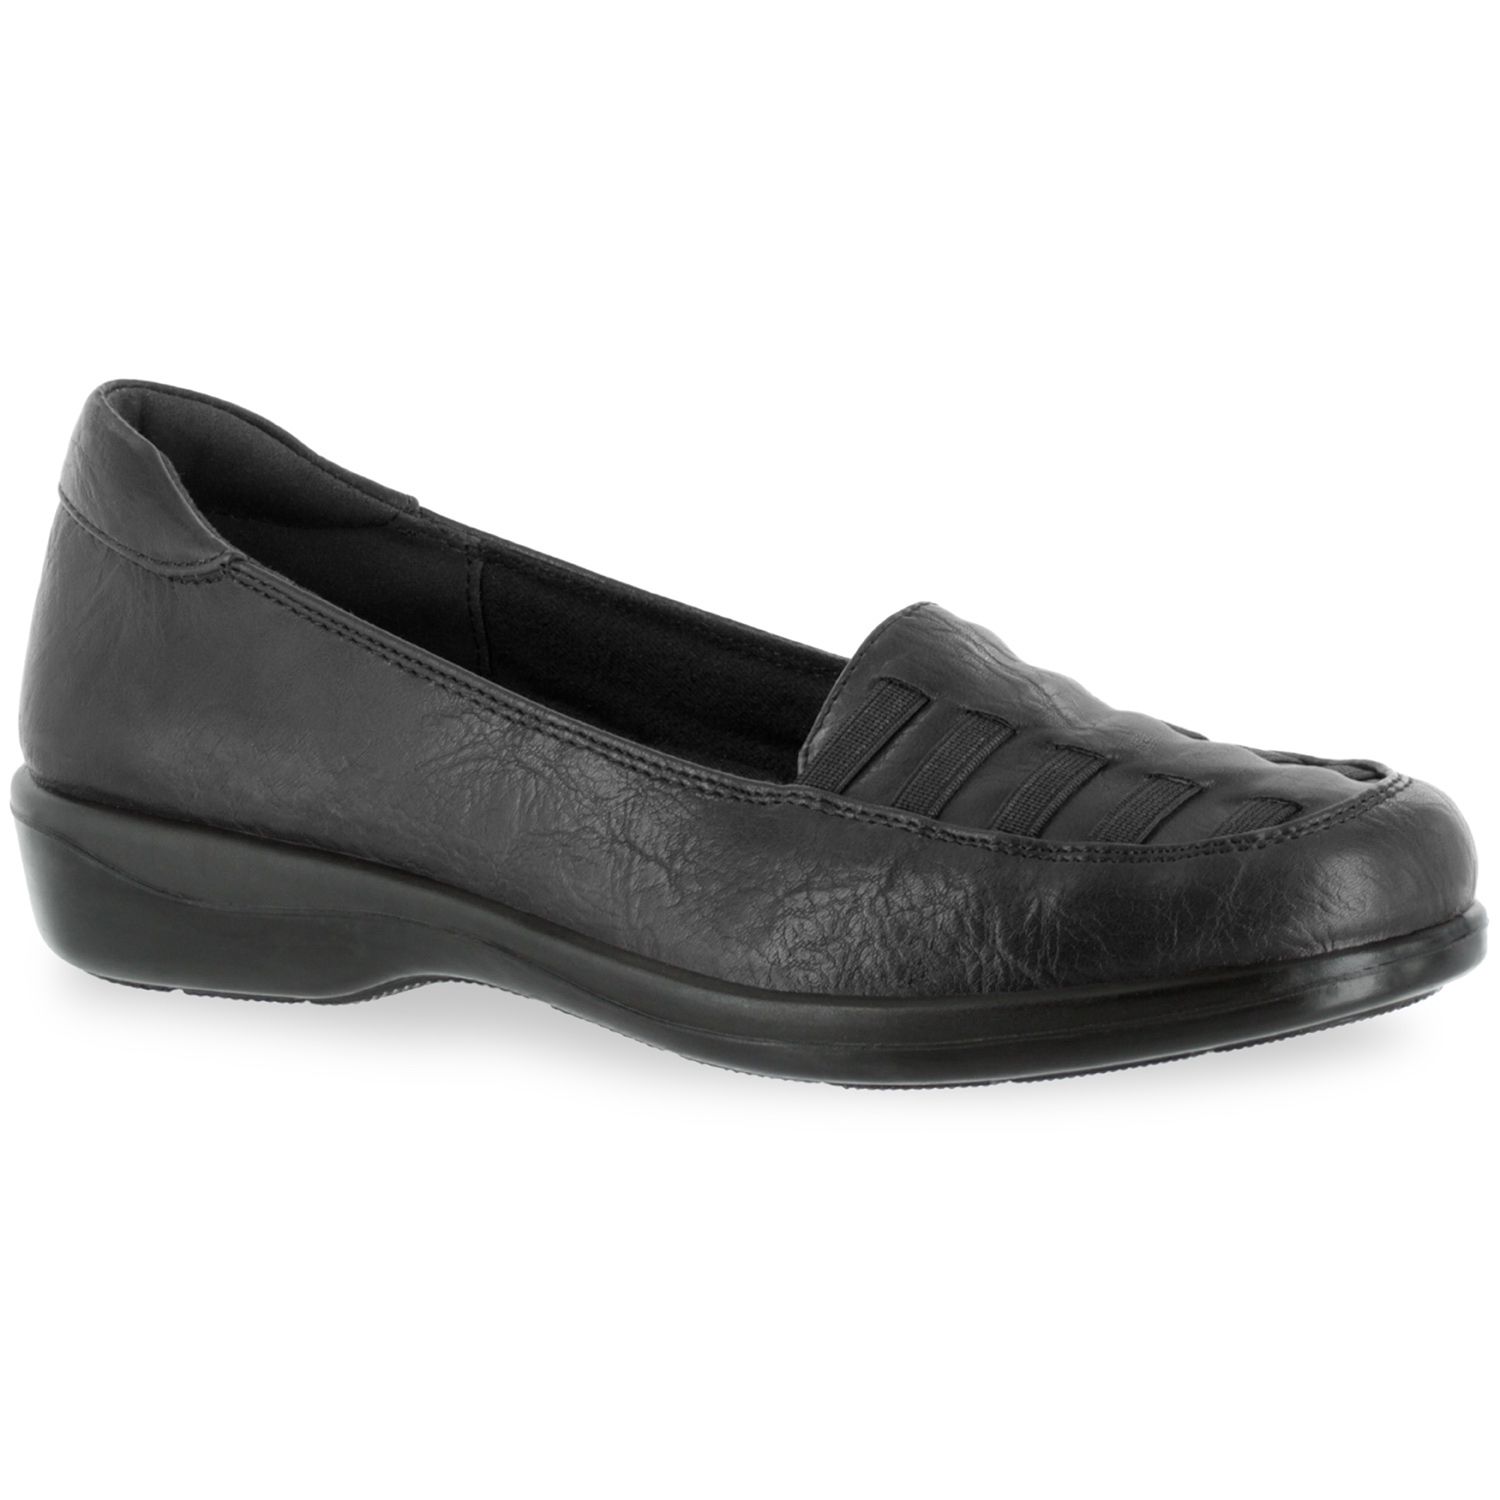 comfortable black shoes